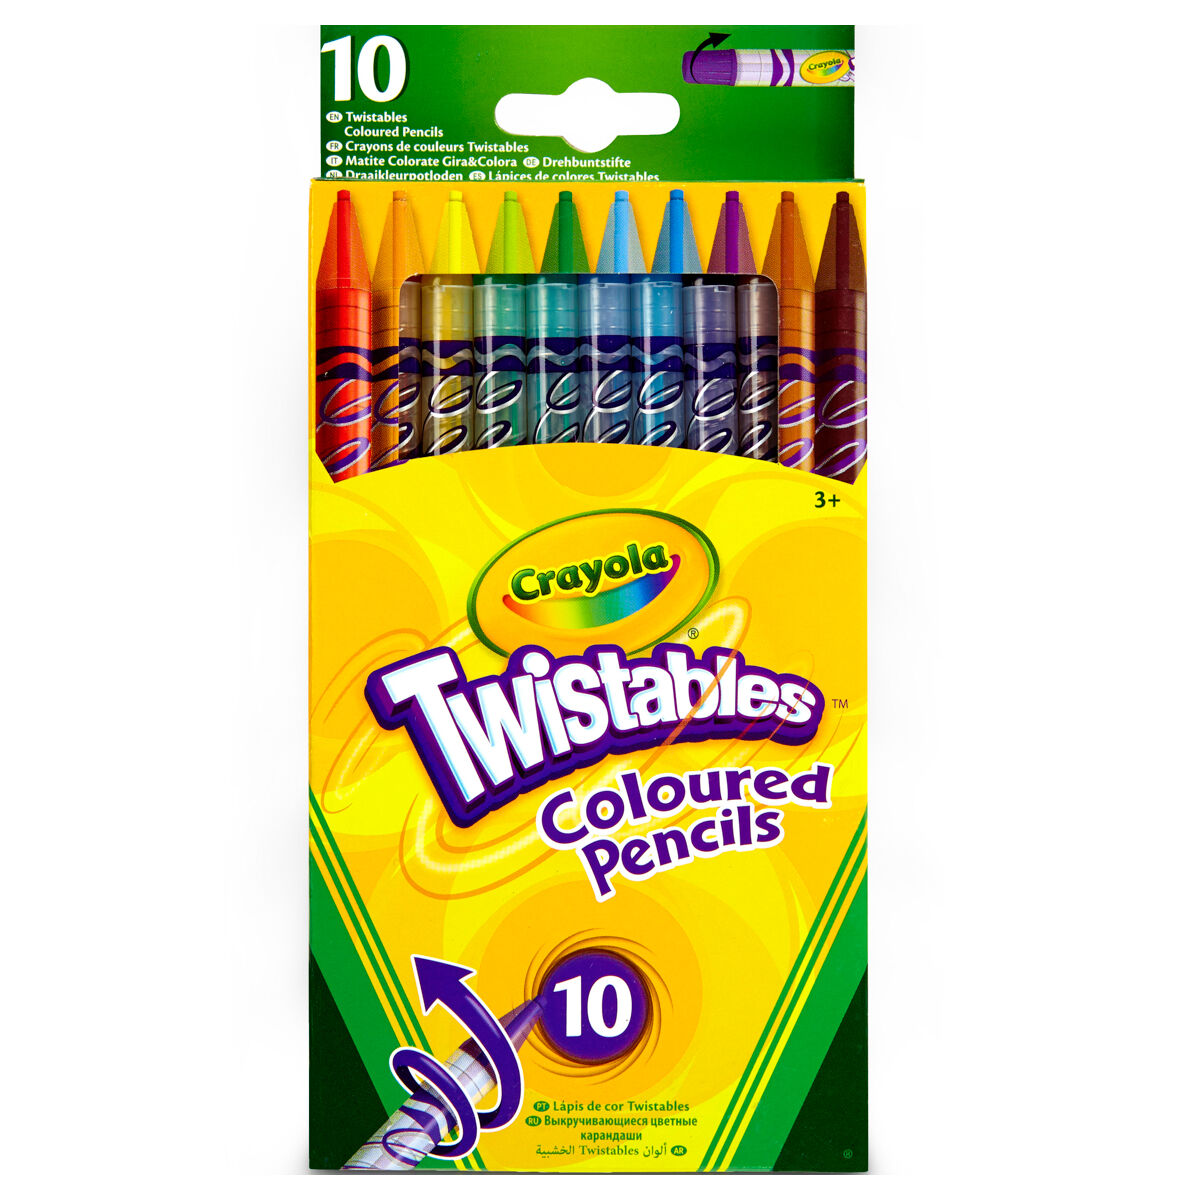 Crayola Twistables Coloured Pencils (Pack of 10) | eBay